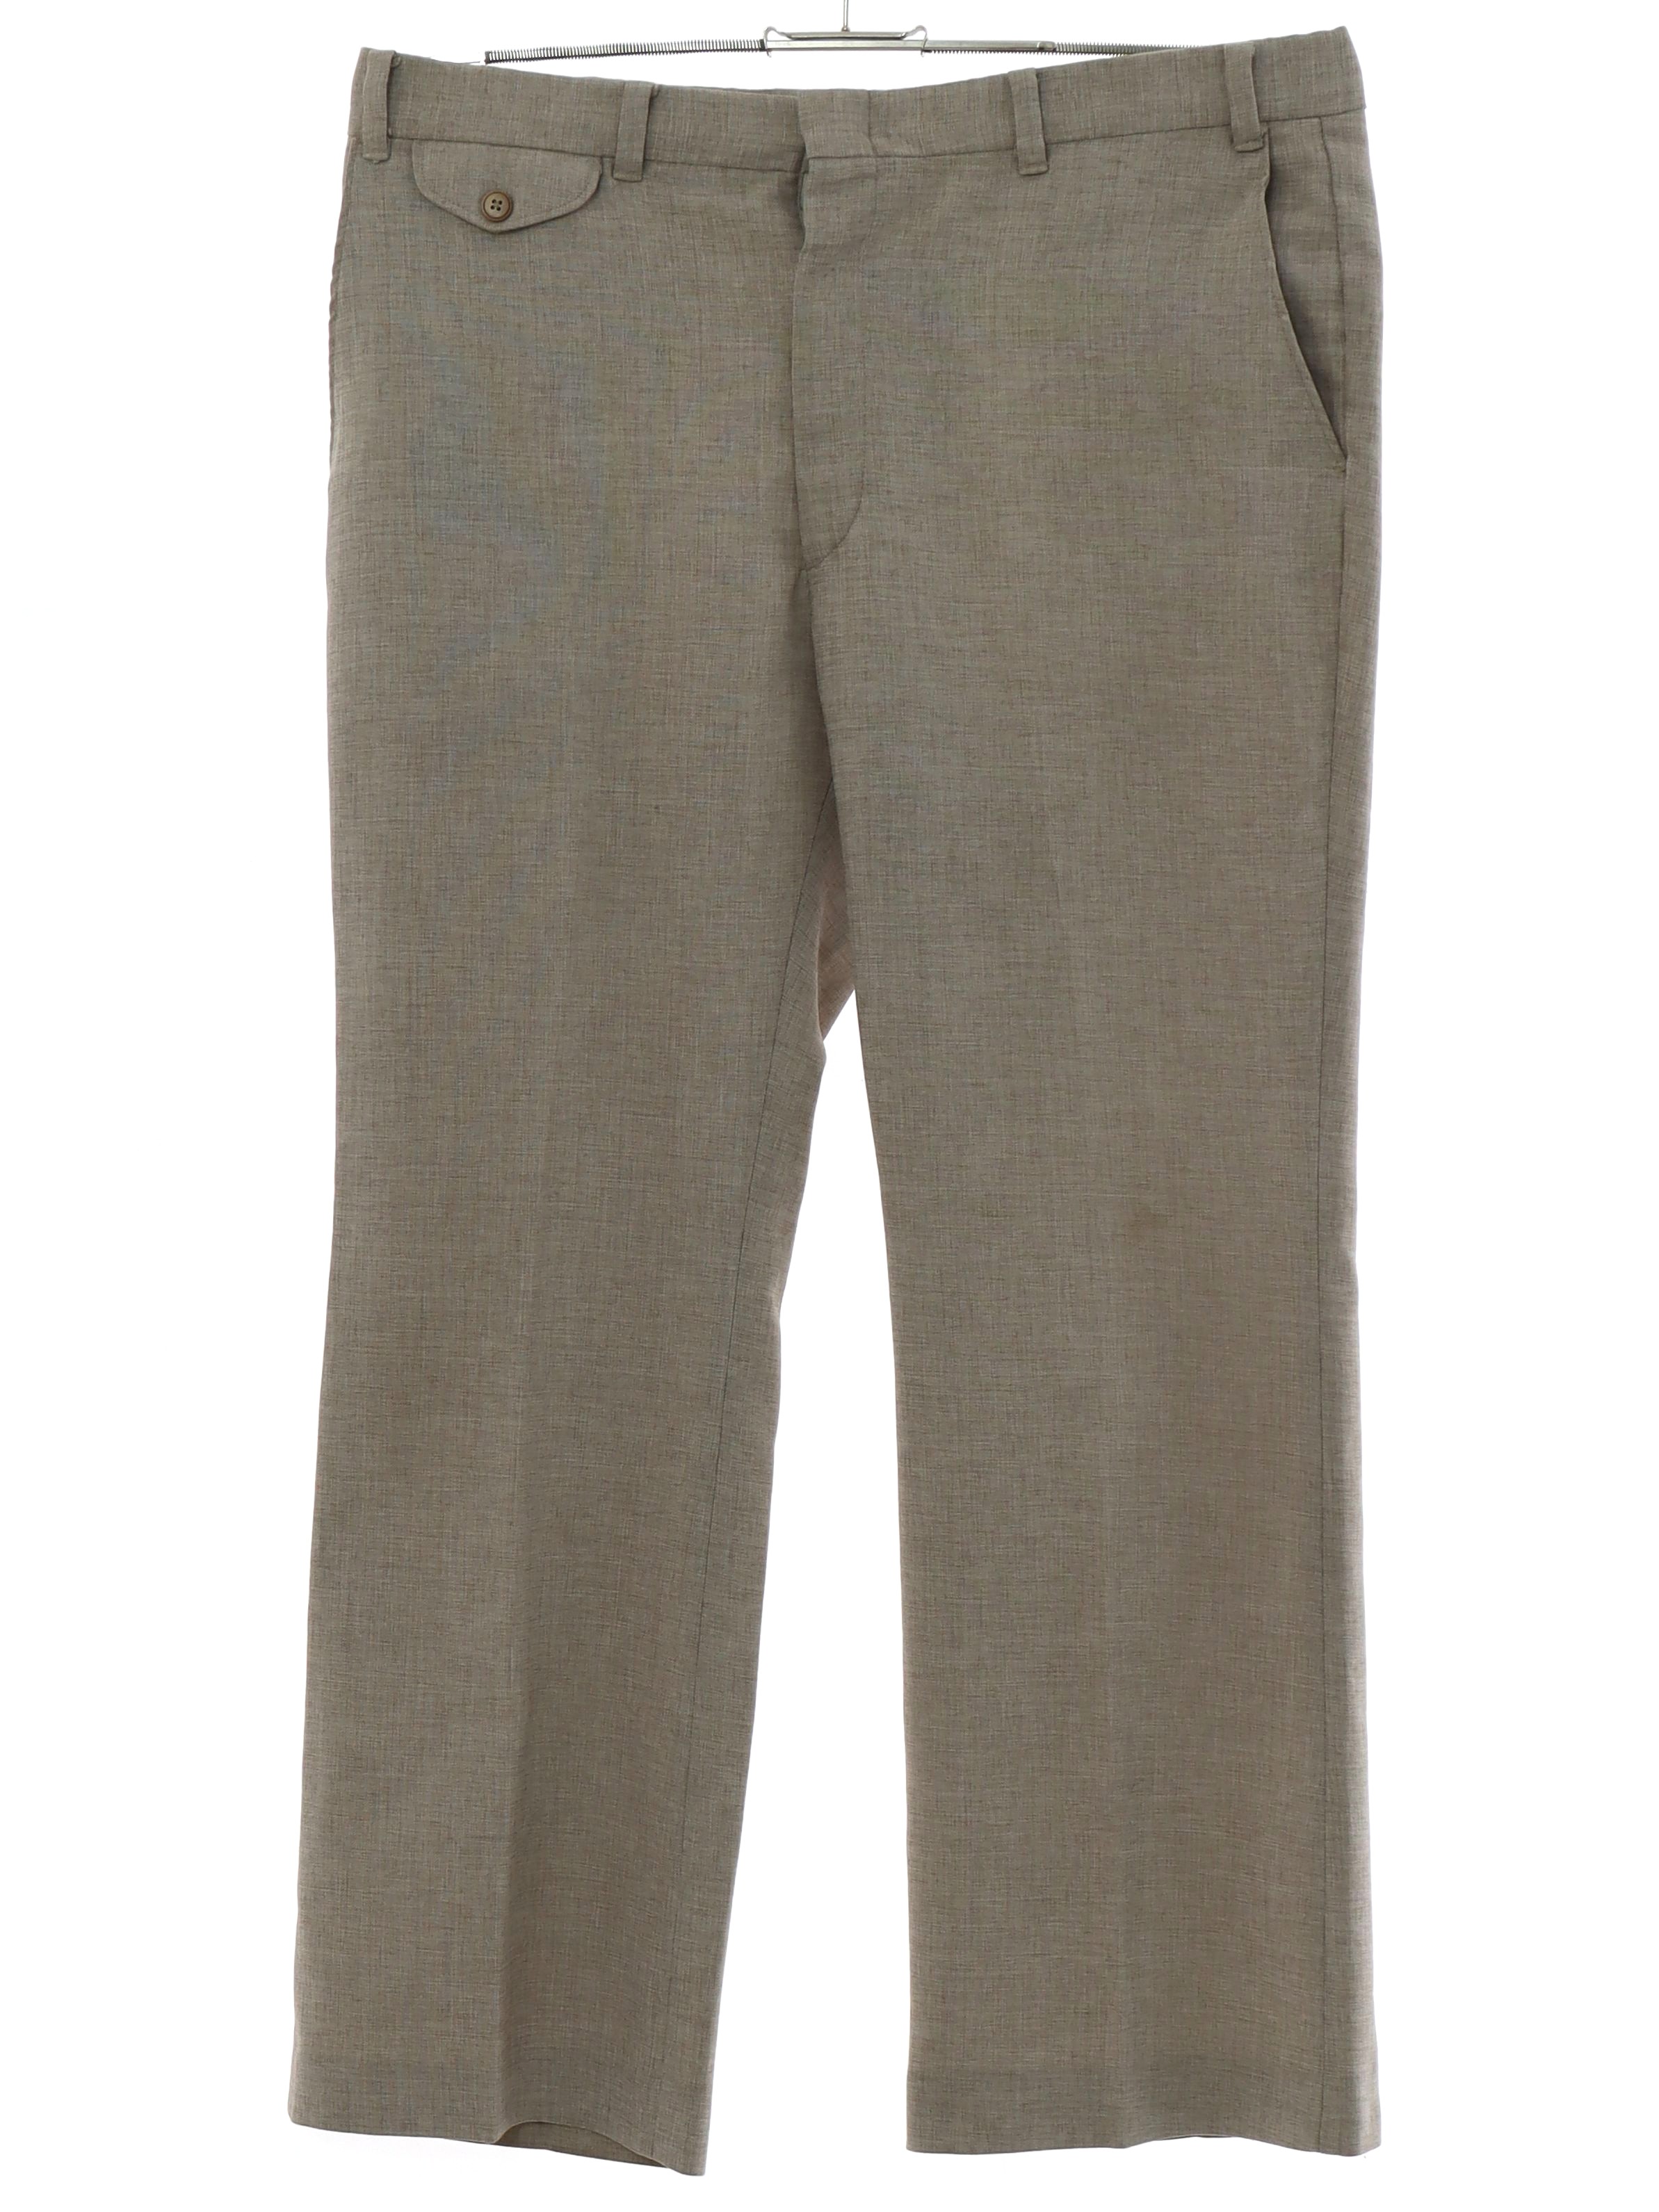 Eighties Vintage Pants: Early 80s -Levis Panatela- Mens heathered